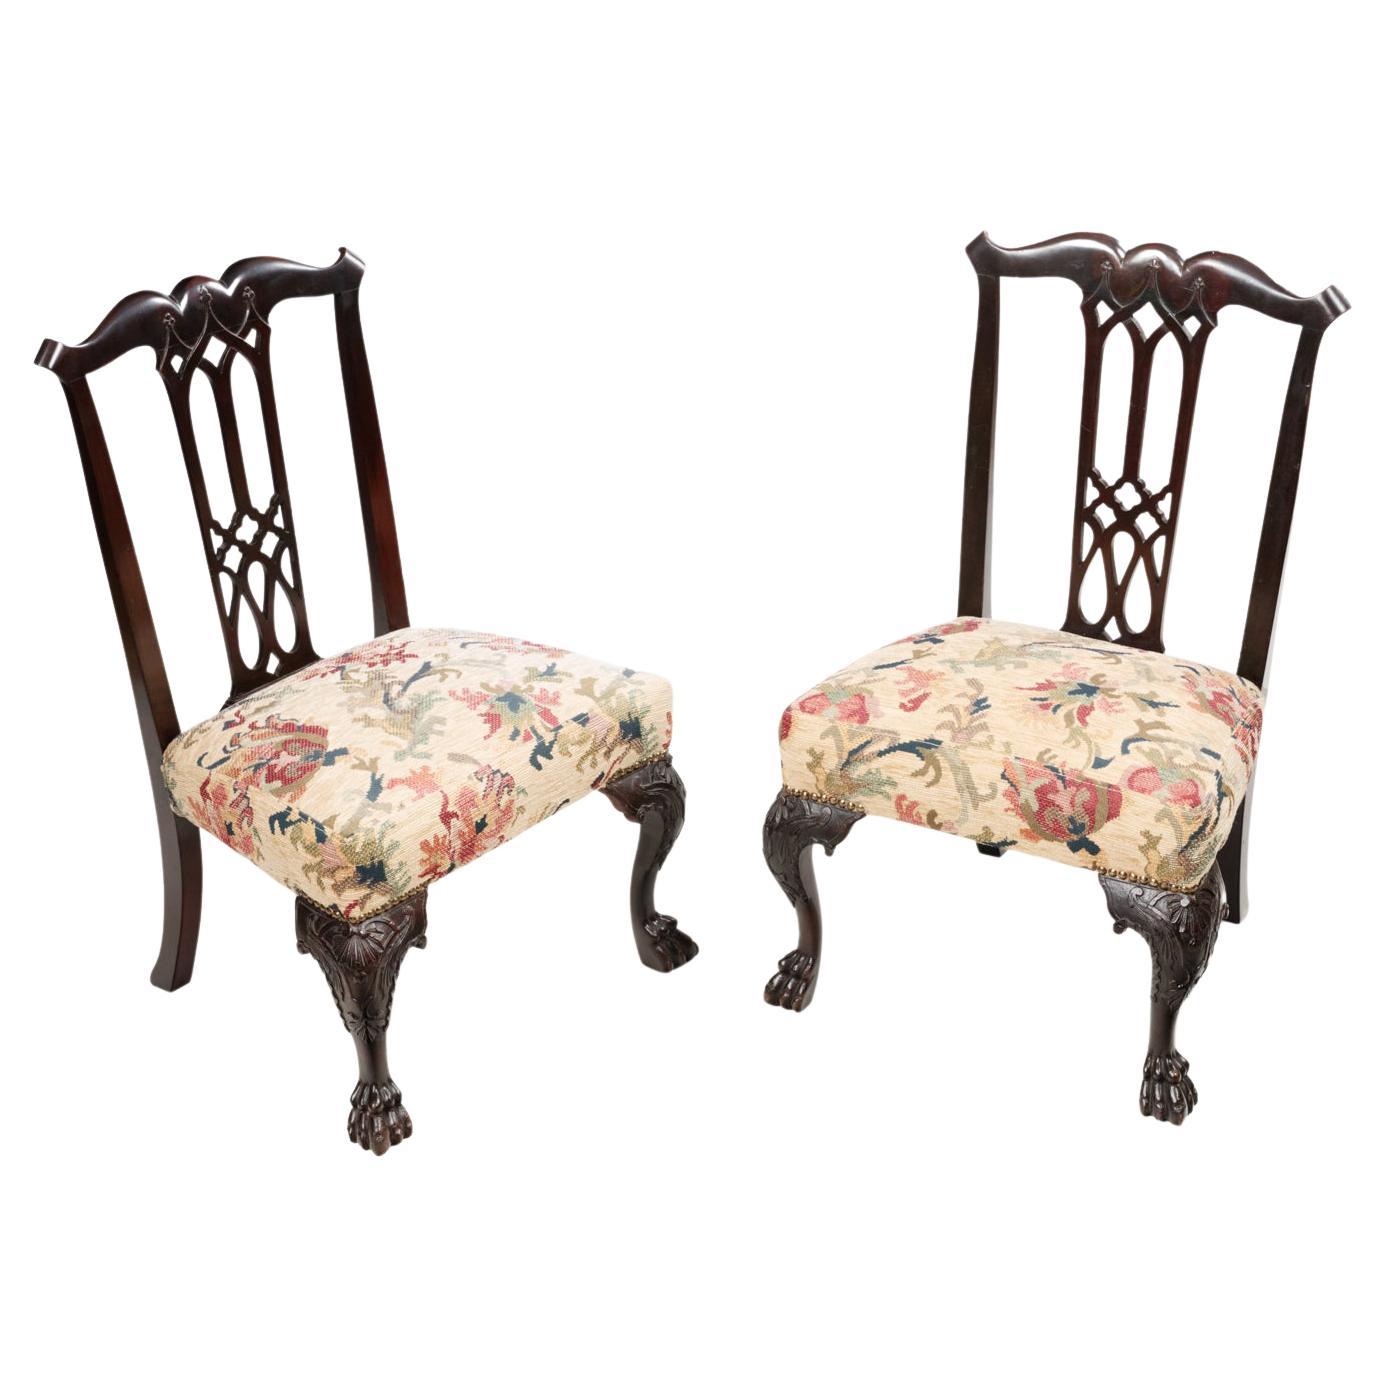 Pair of 18th Century Irish Miniature Chairs, Attributed to Butler of Dublin